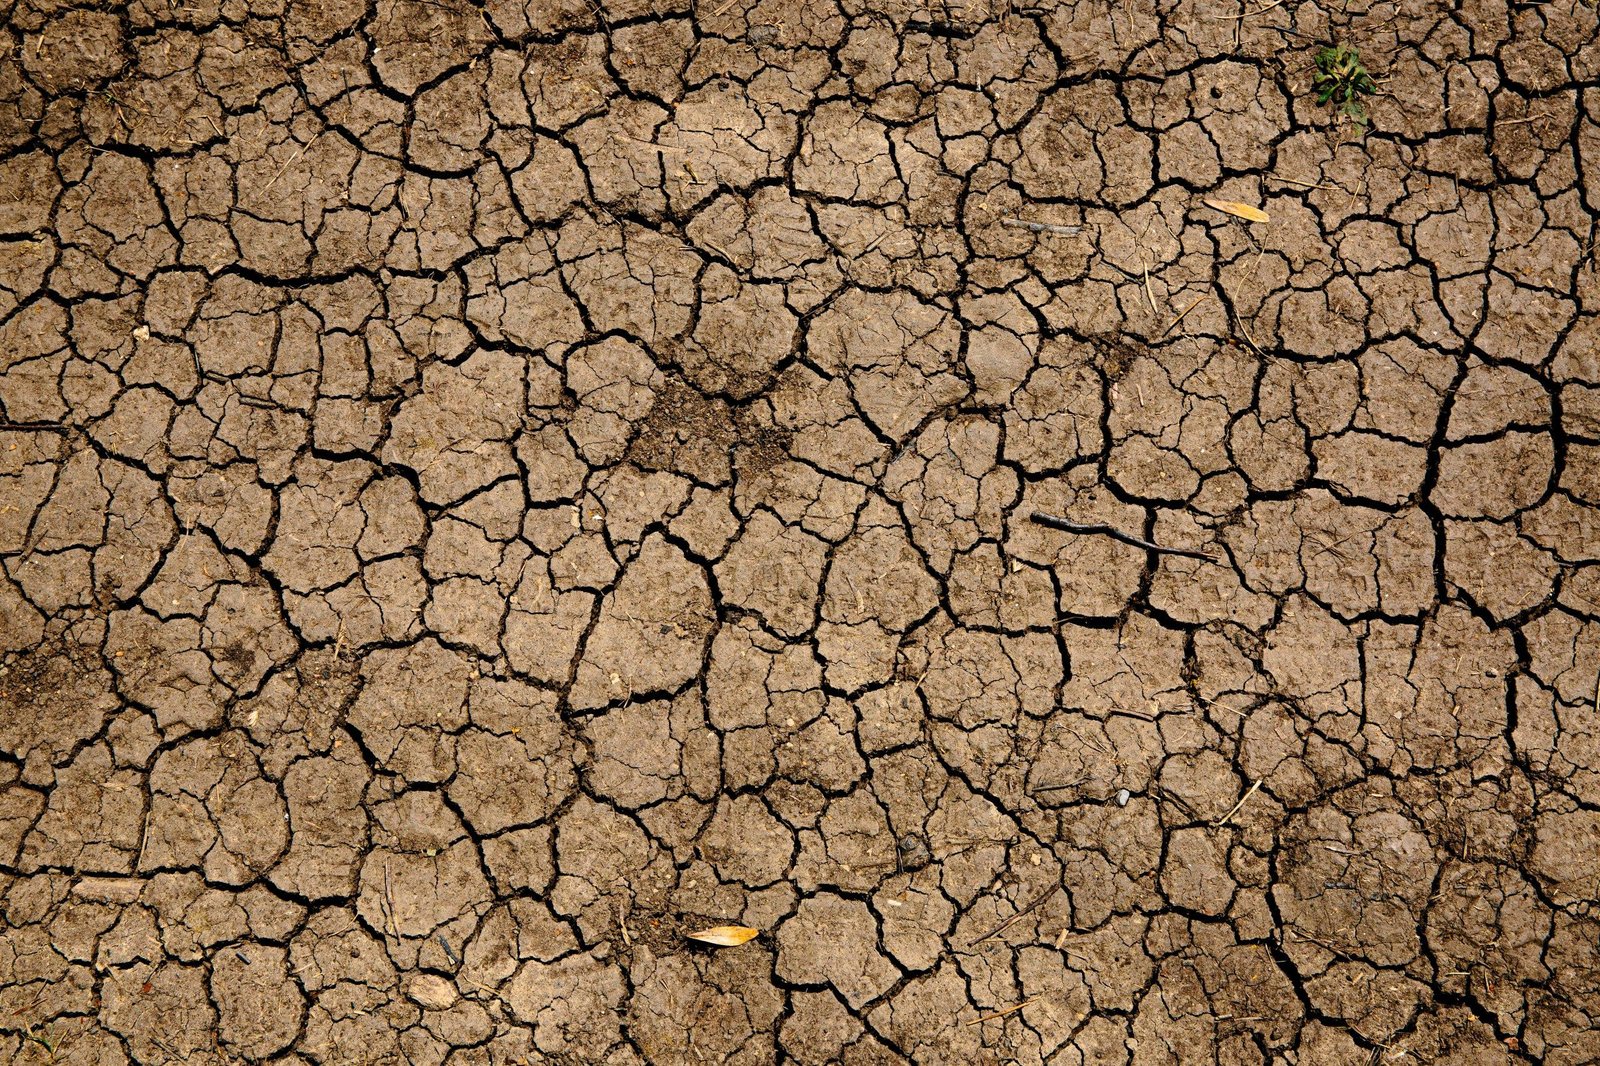 Drought in Marbella